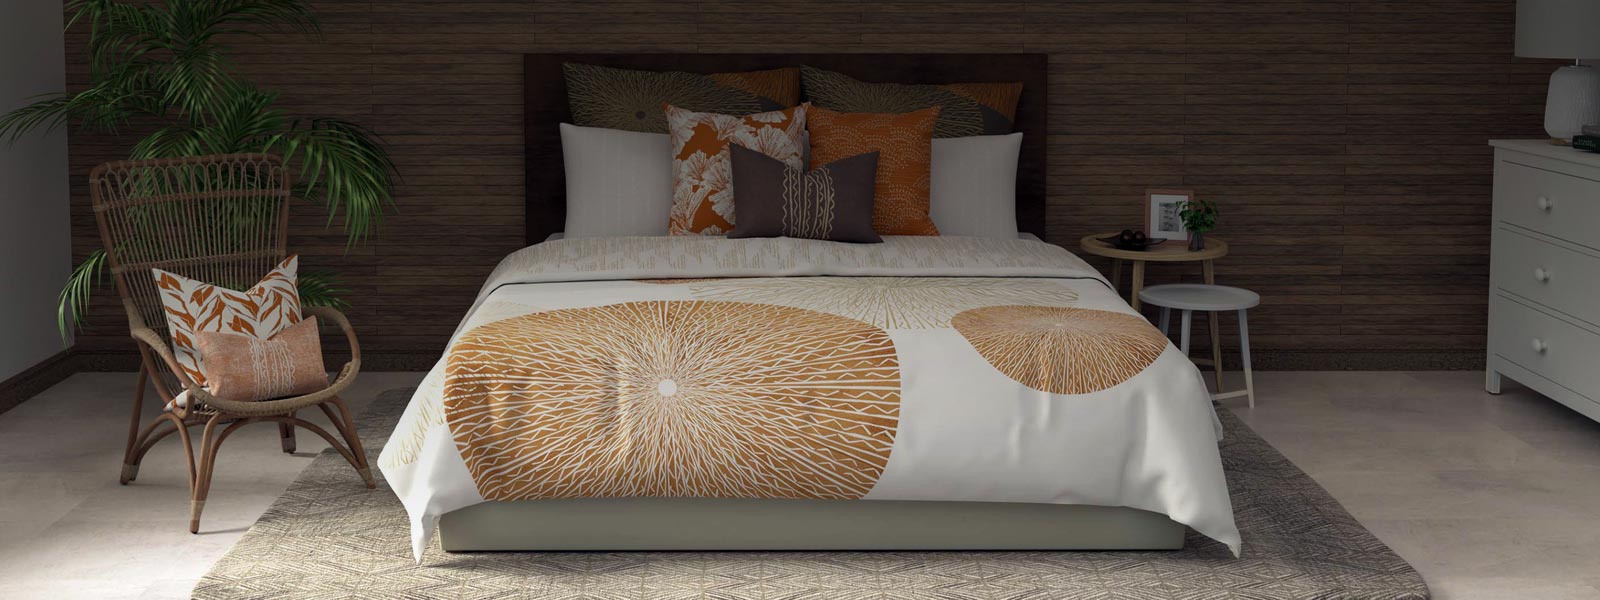 Coastal Home Decor Hawaiian Print Maluhia Duvet Cover On a King Size Bed With Decor Pillows and Euro Shams